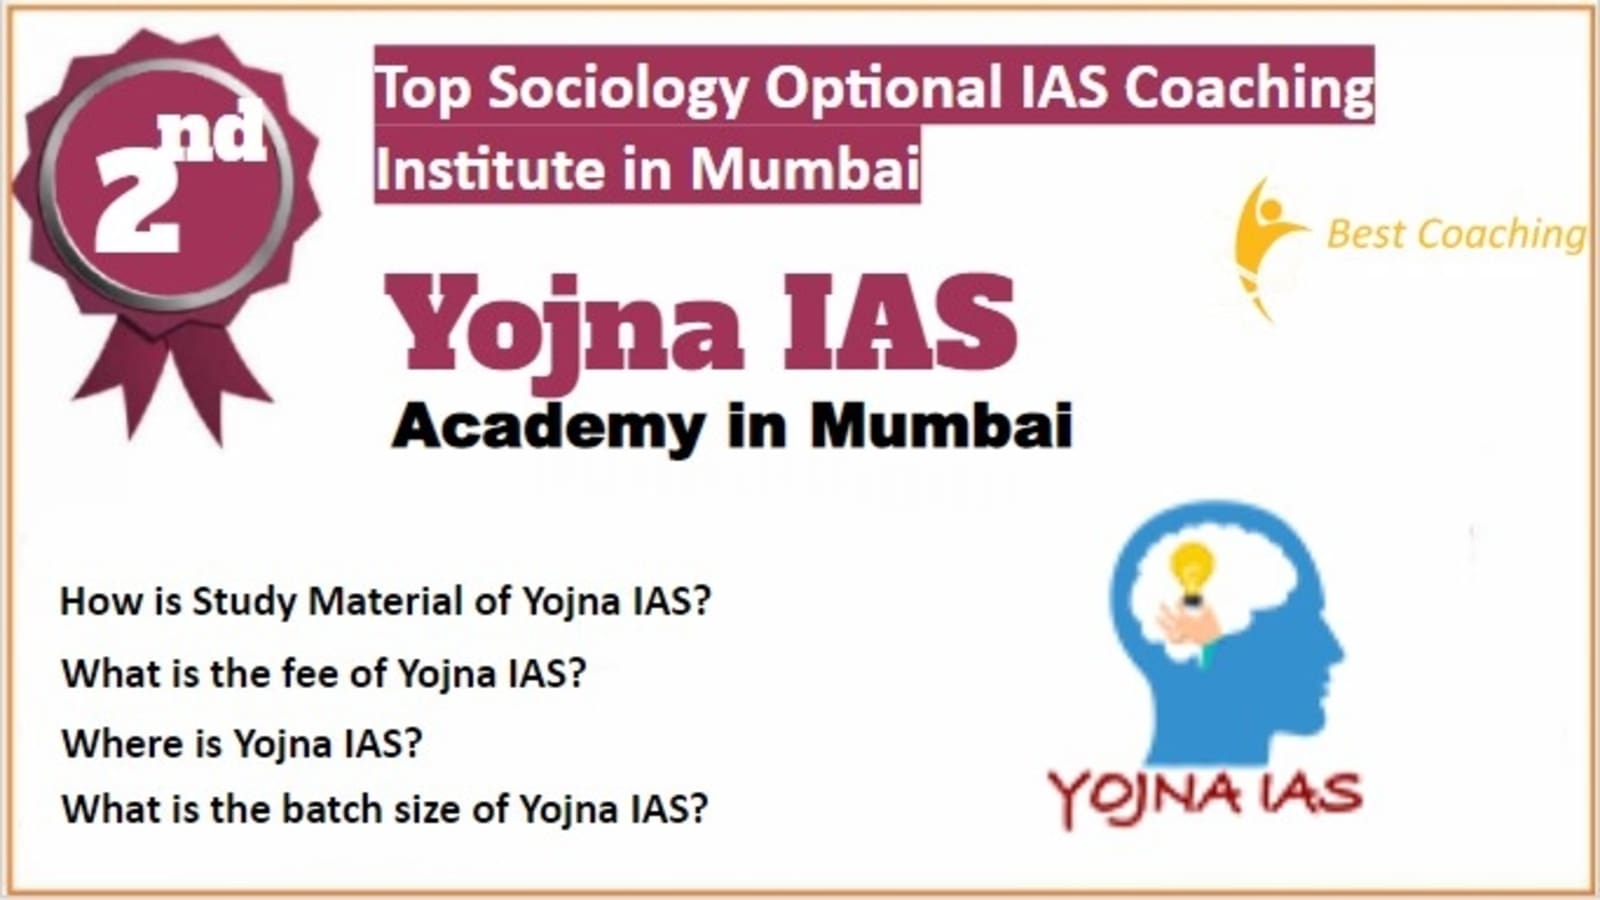 Rank 2 Best Sociology Optional IAS Coaching in Mumbai